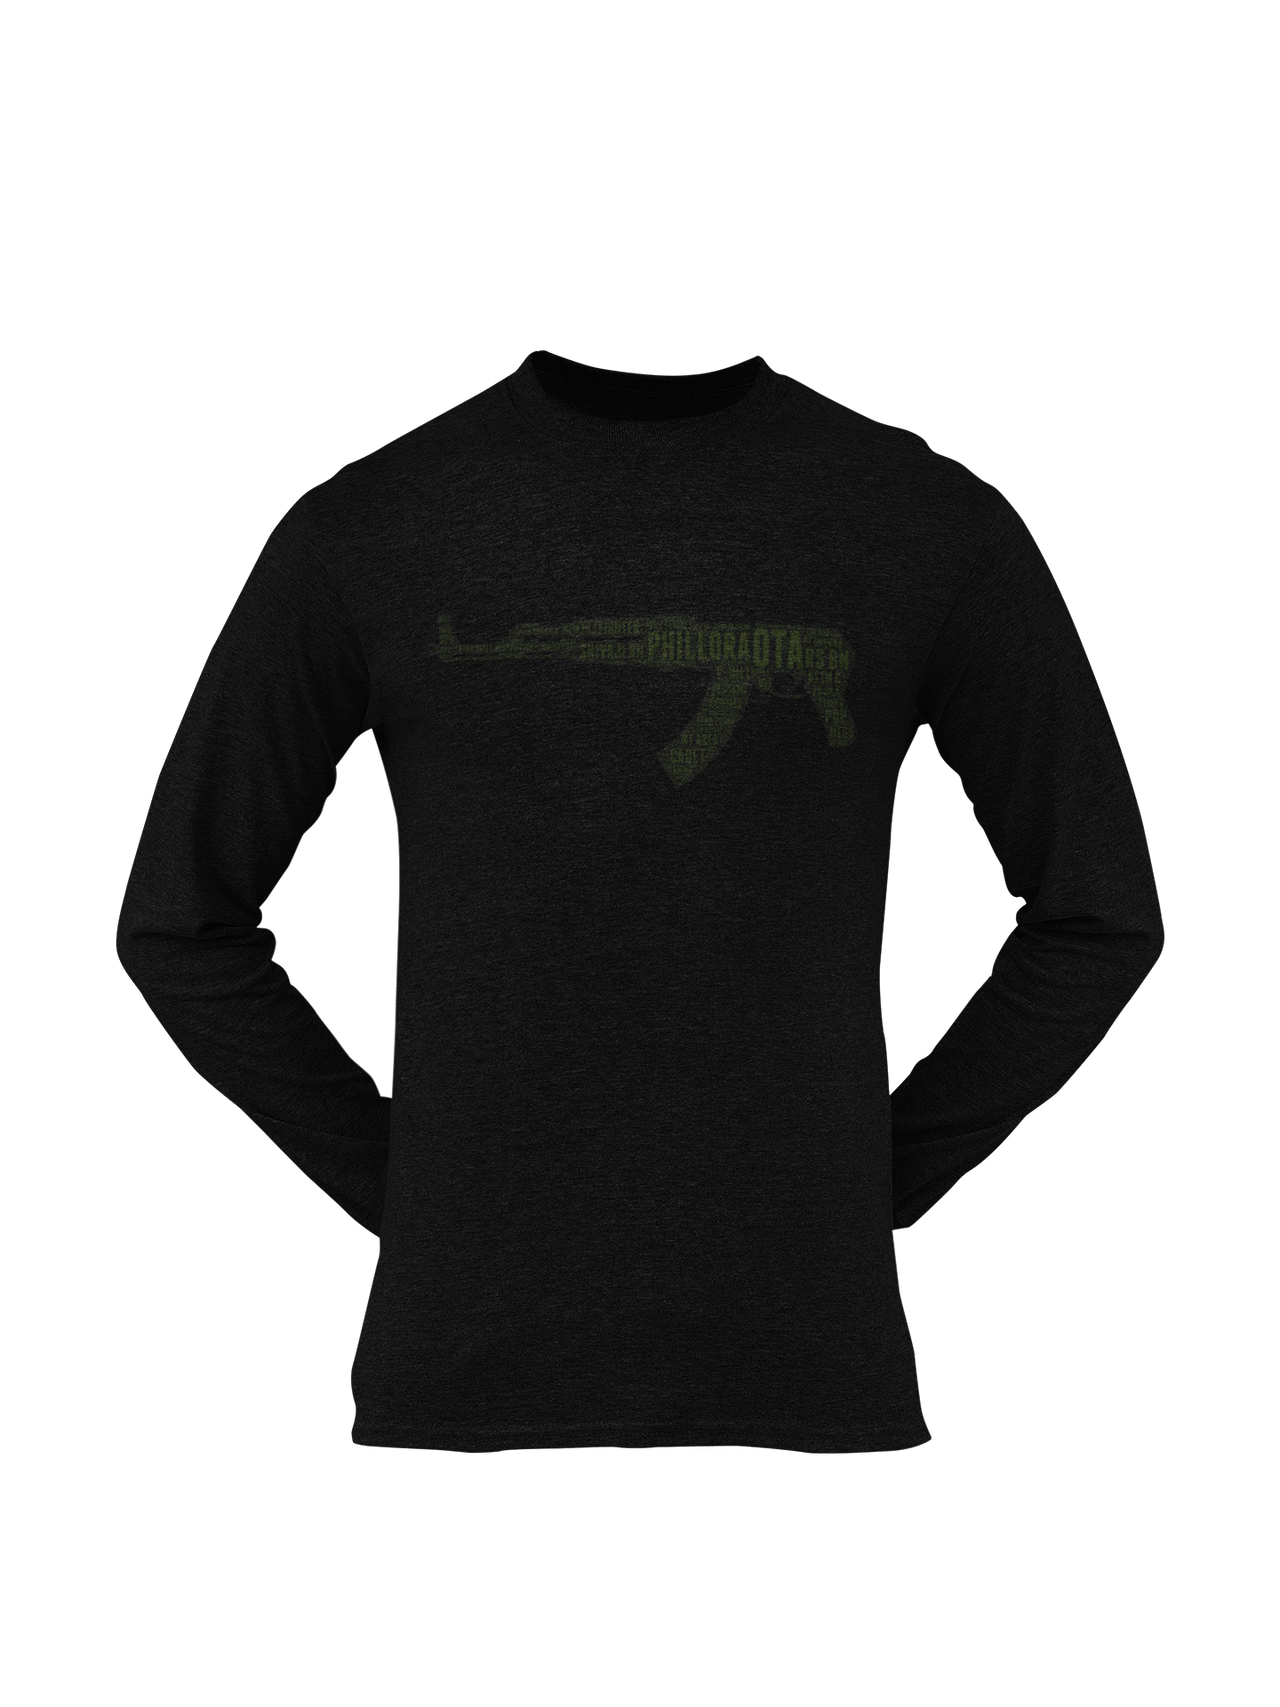 OTA T-shirt - Word Cloud Phillora - AK-47 Folding Stock (Men)